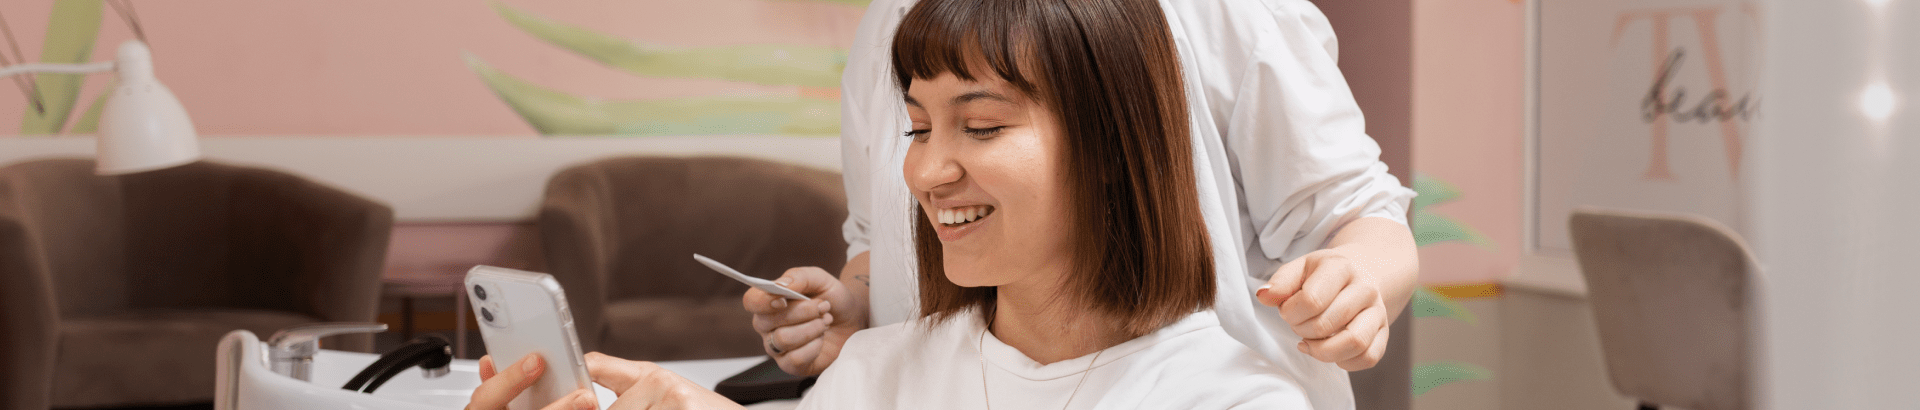 7 Ways Text Marketing Platforms Can Benefit Your Beauty Salon Business